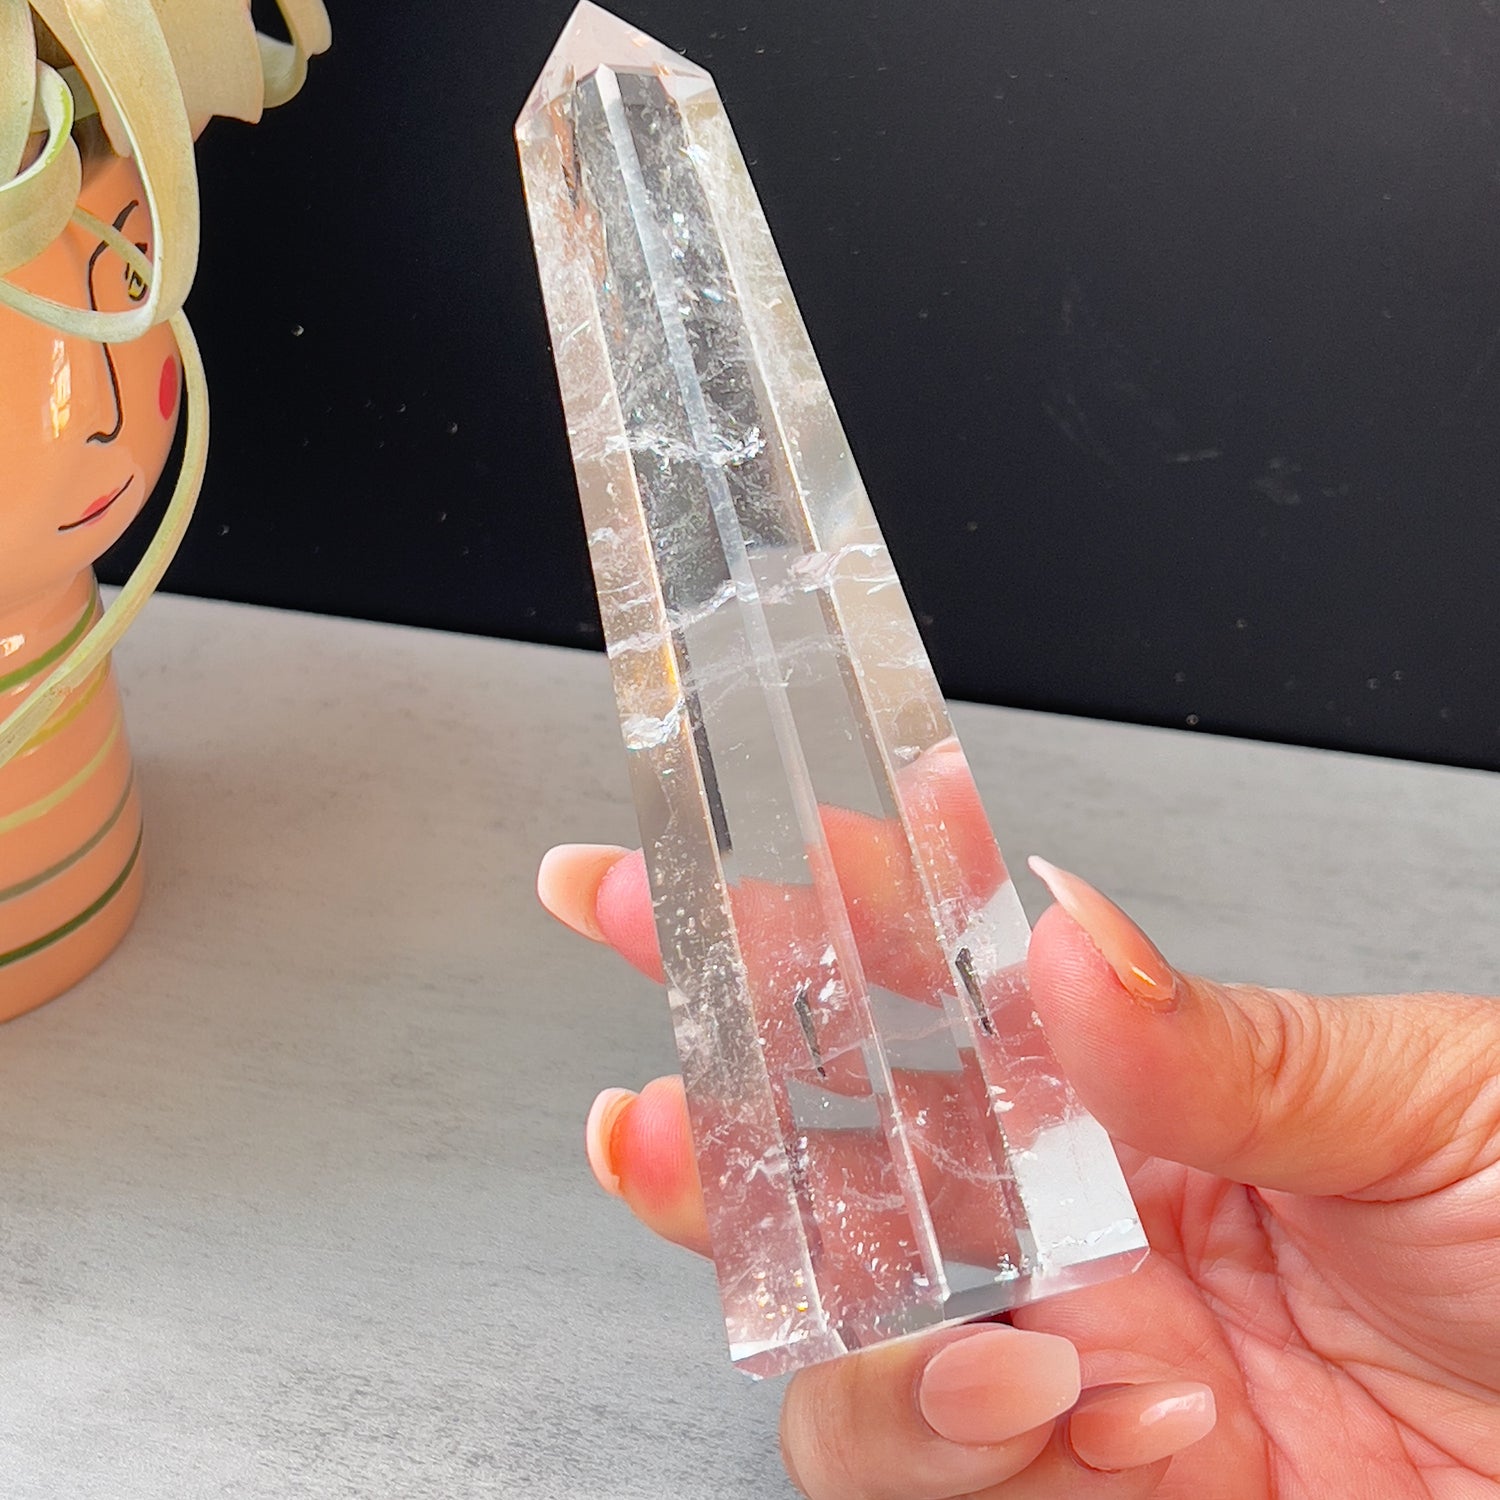 High Clarity Clear Quartz Obelisk Tower with STUNNING Rainbows | High Quality Quartz Crystal Generator | Unique Crystal Decor